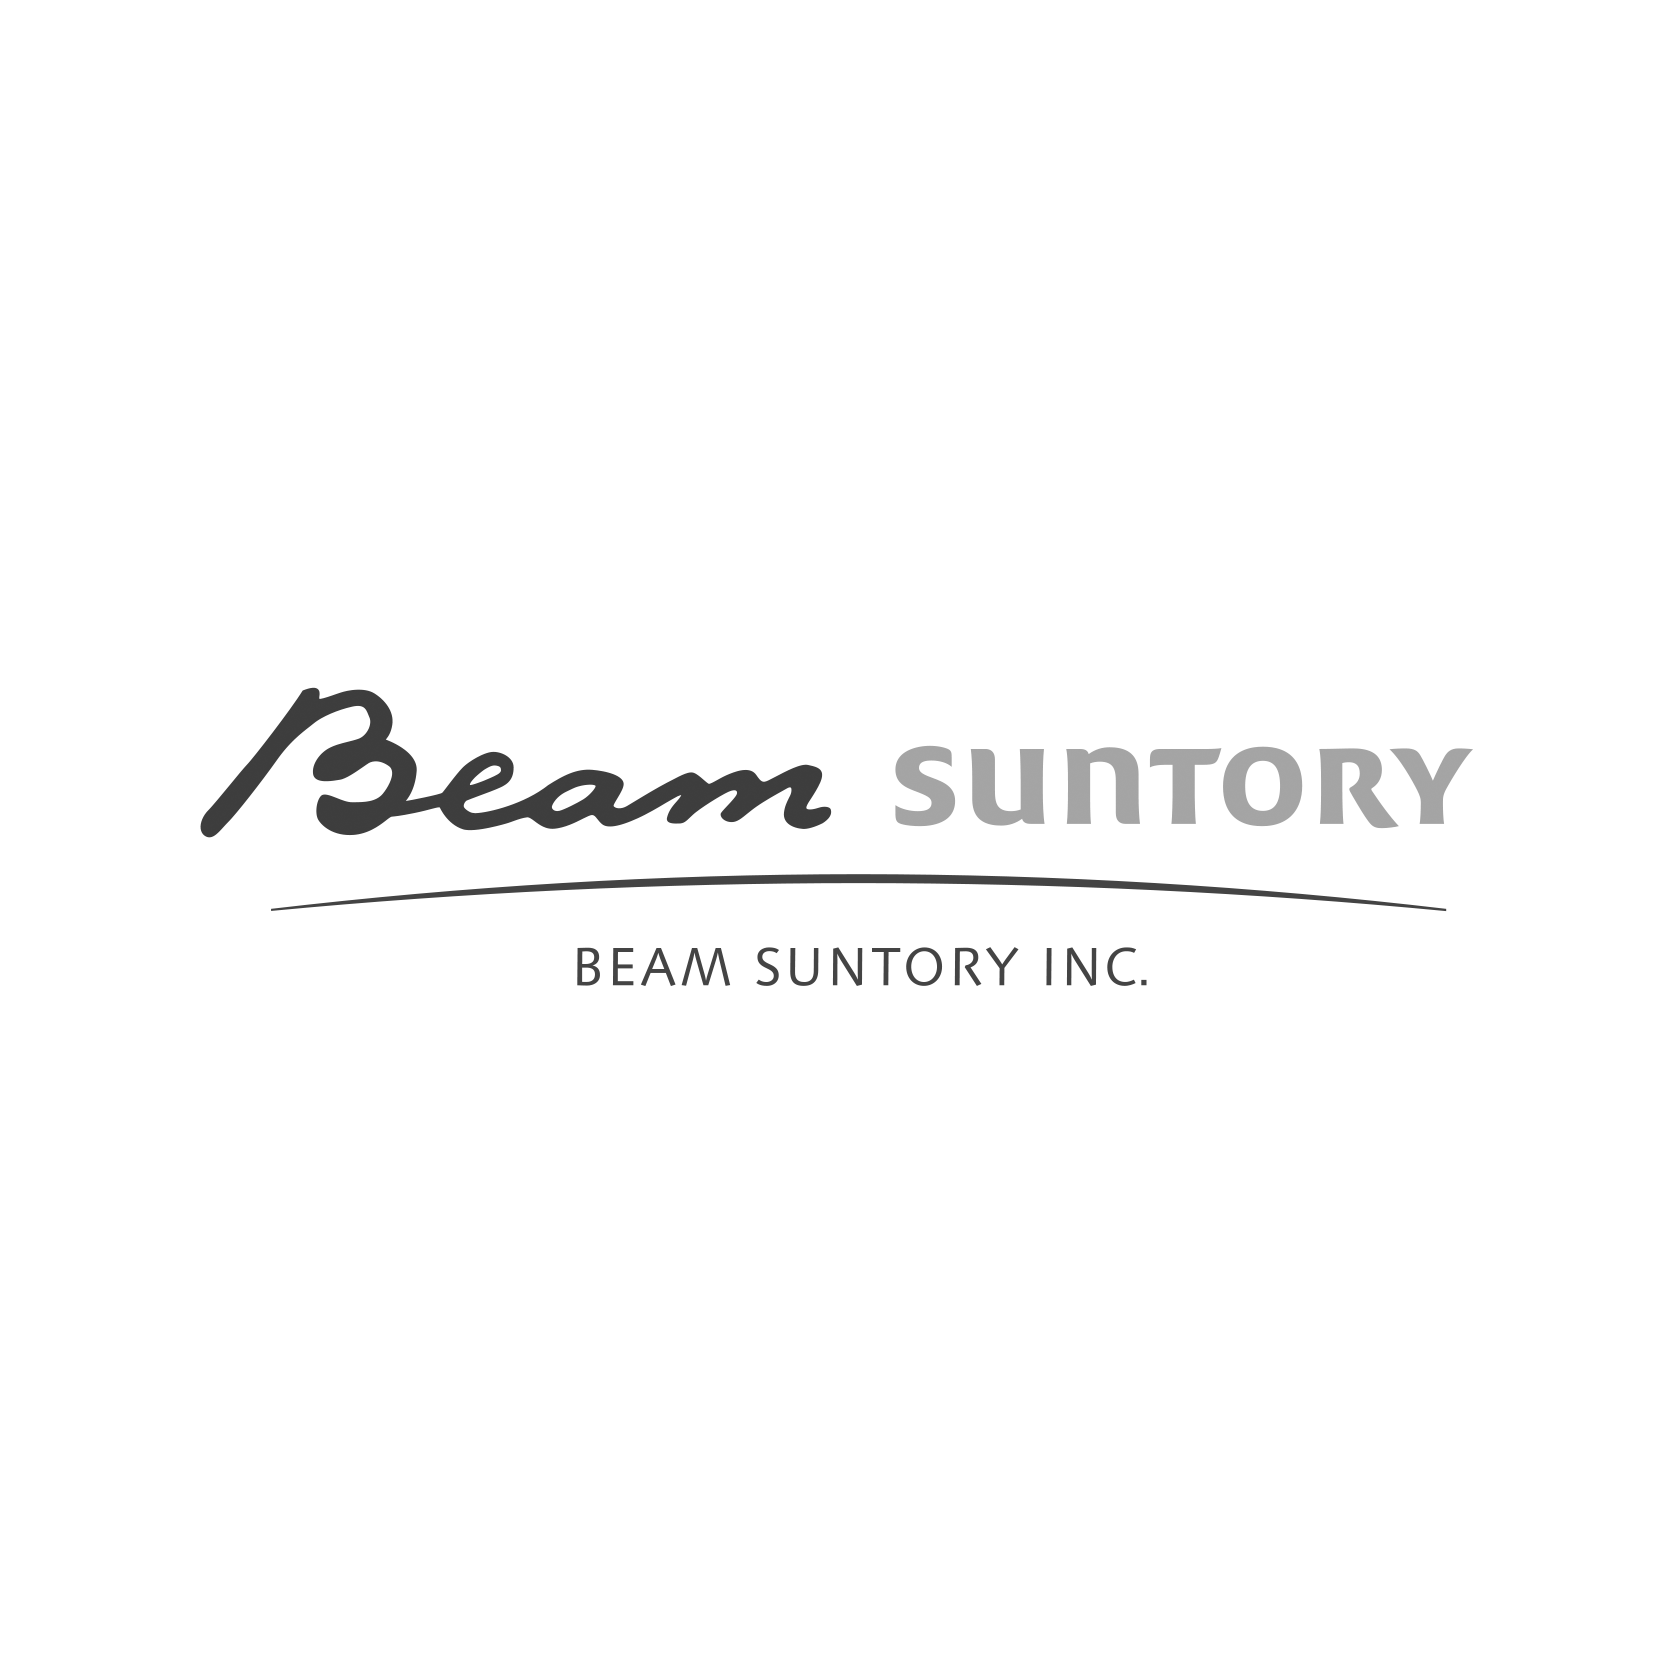 Beam Suntory Logo - Grayscale